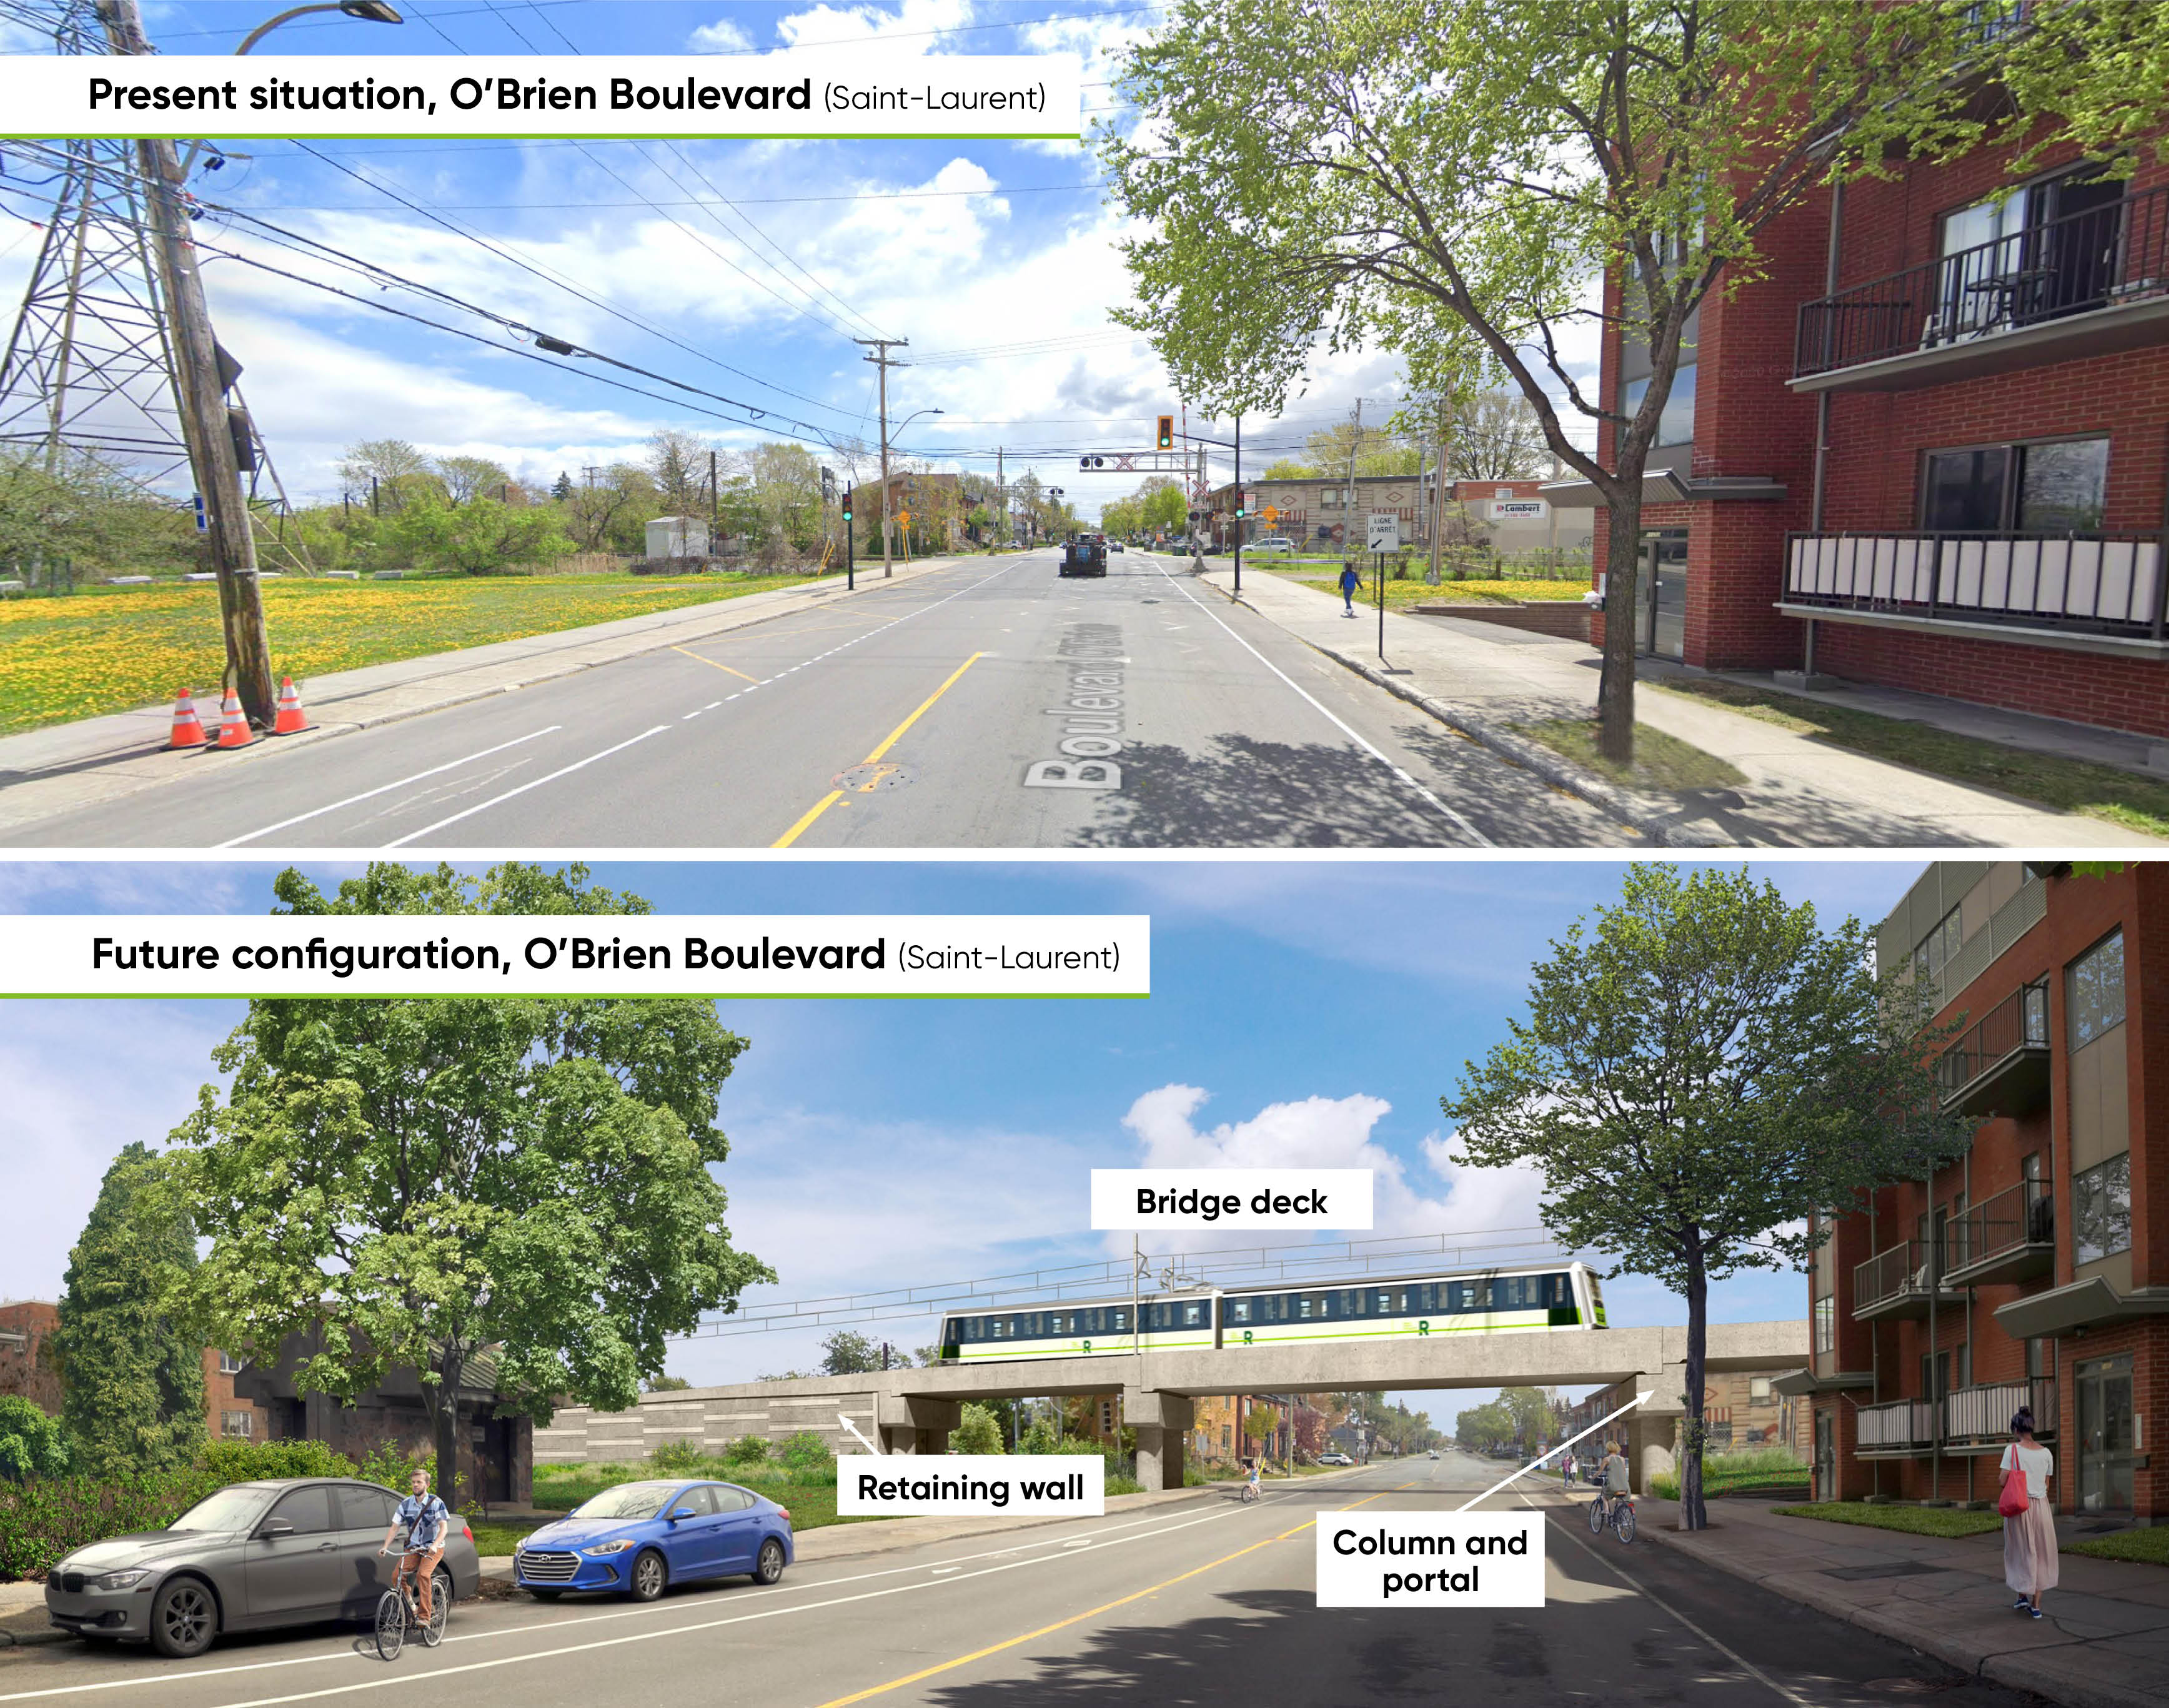 Current vs future configuration of O'Brien Boulevard